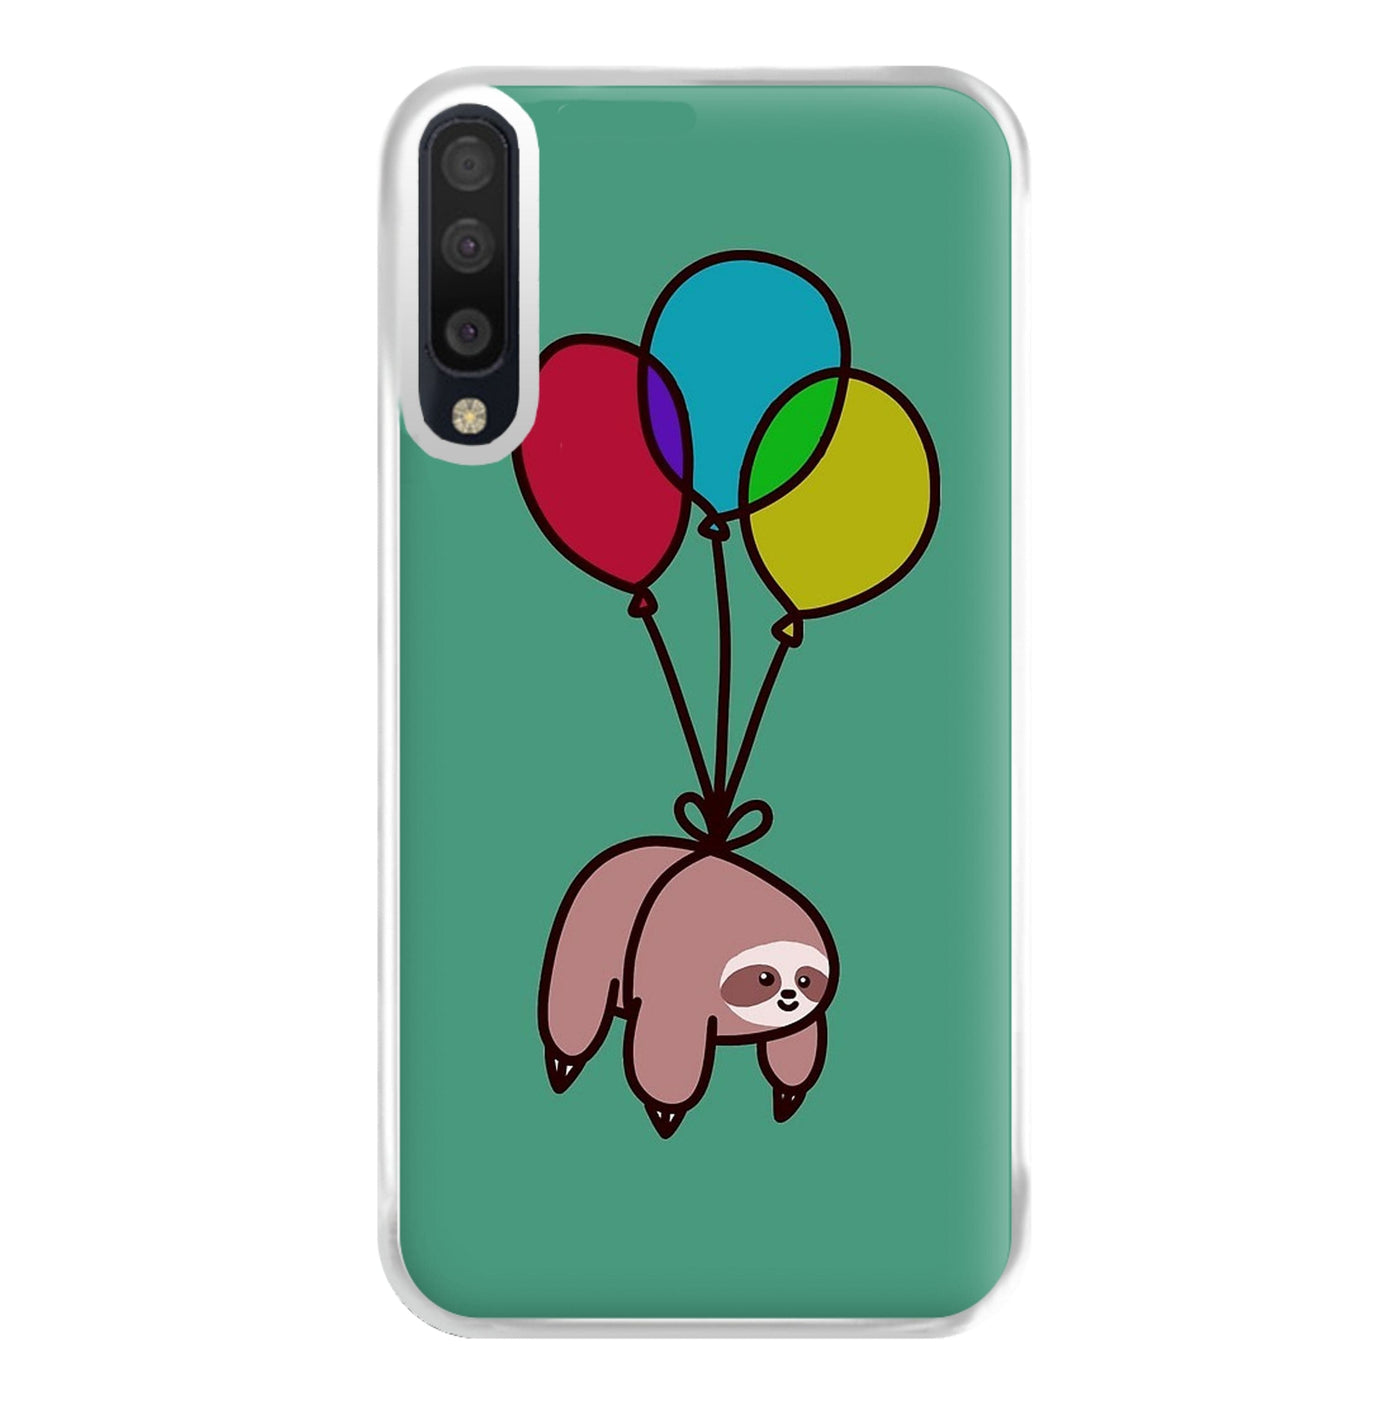 Balloon Sloth Phone Case